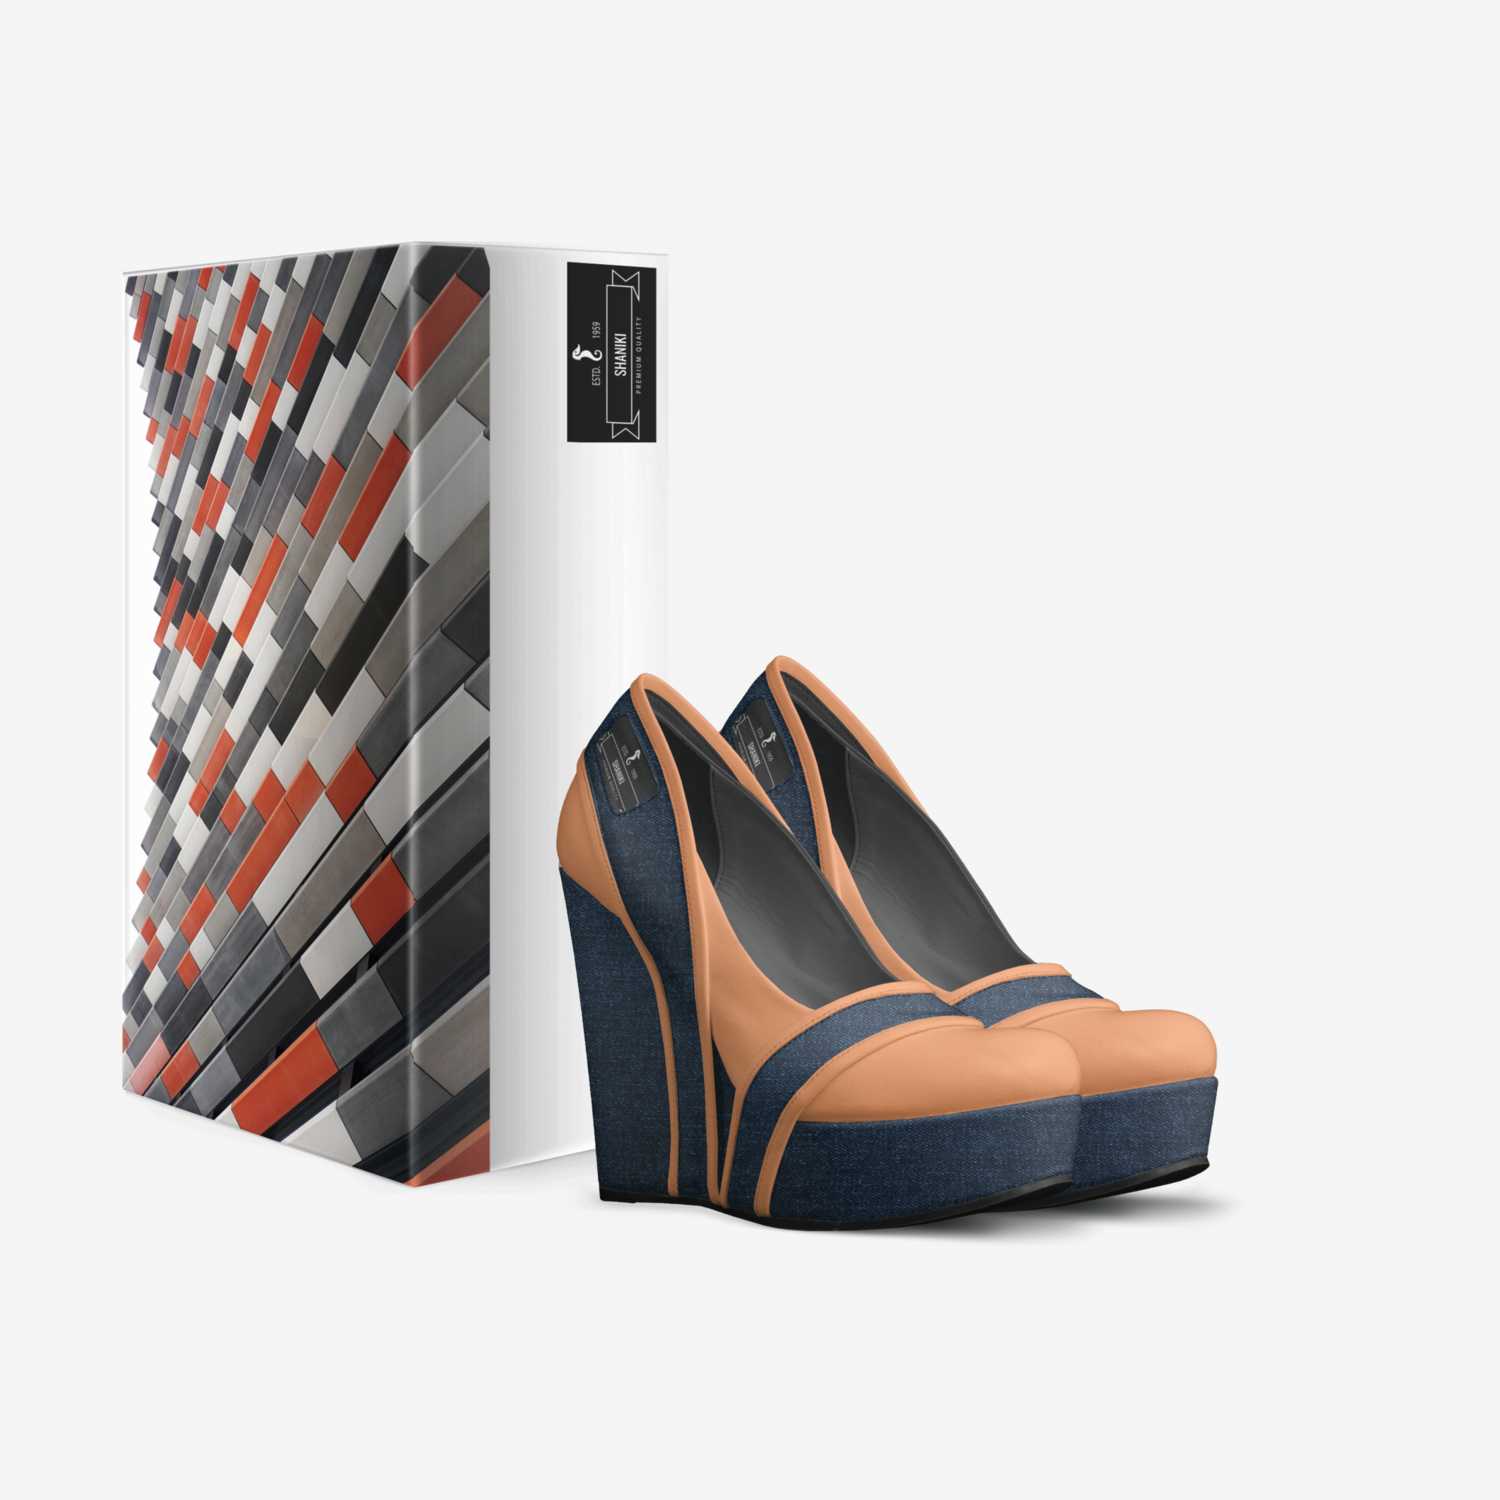 shaniki custom made in Italy shoes by Shaniki Smith | Box view